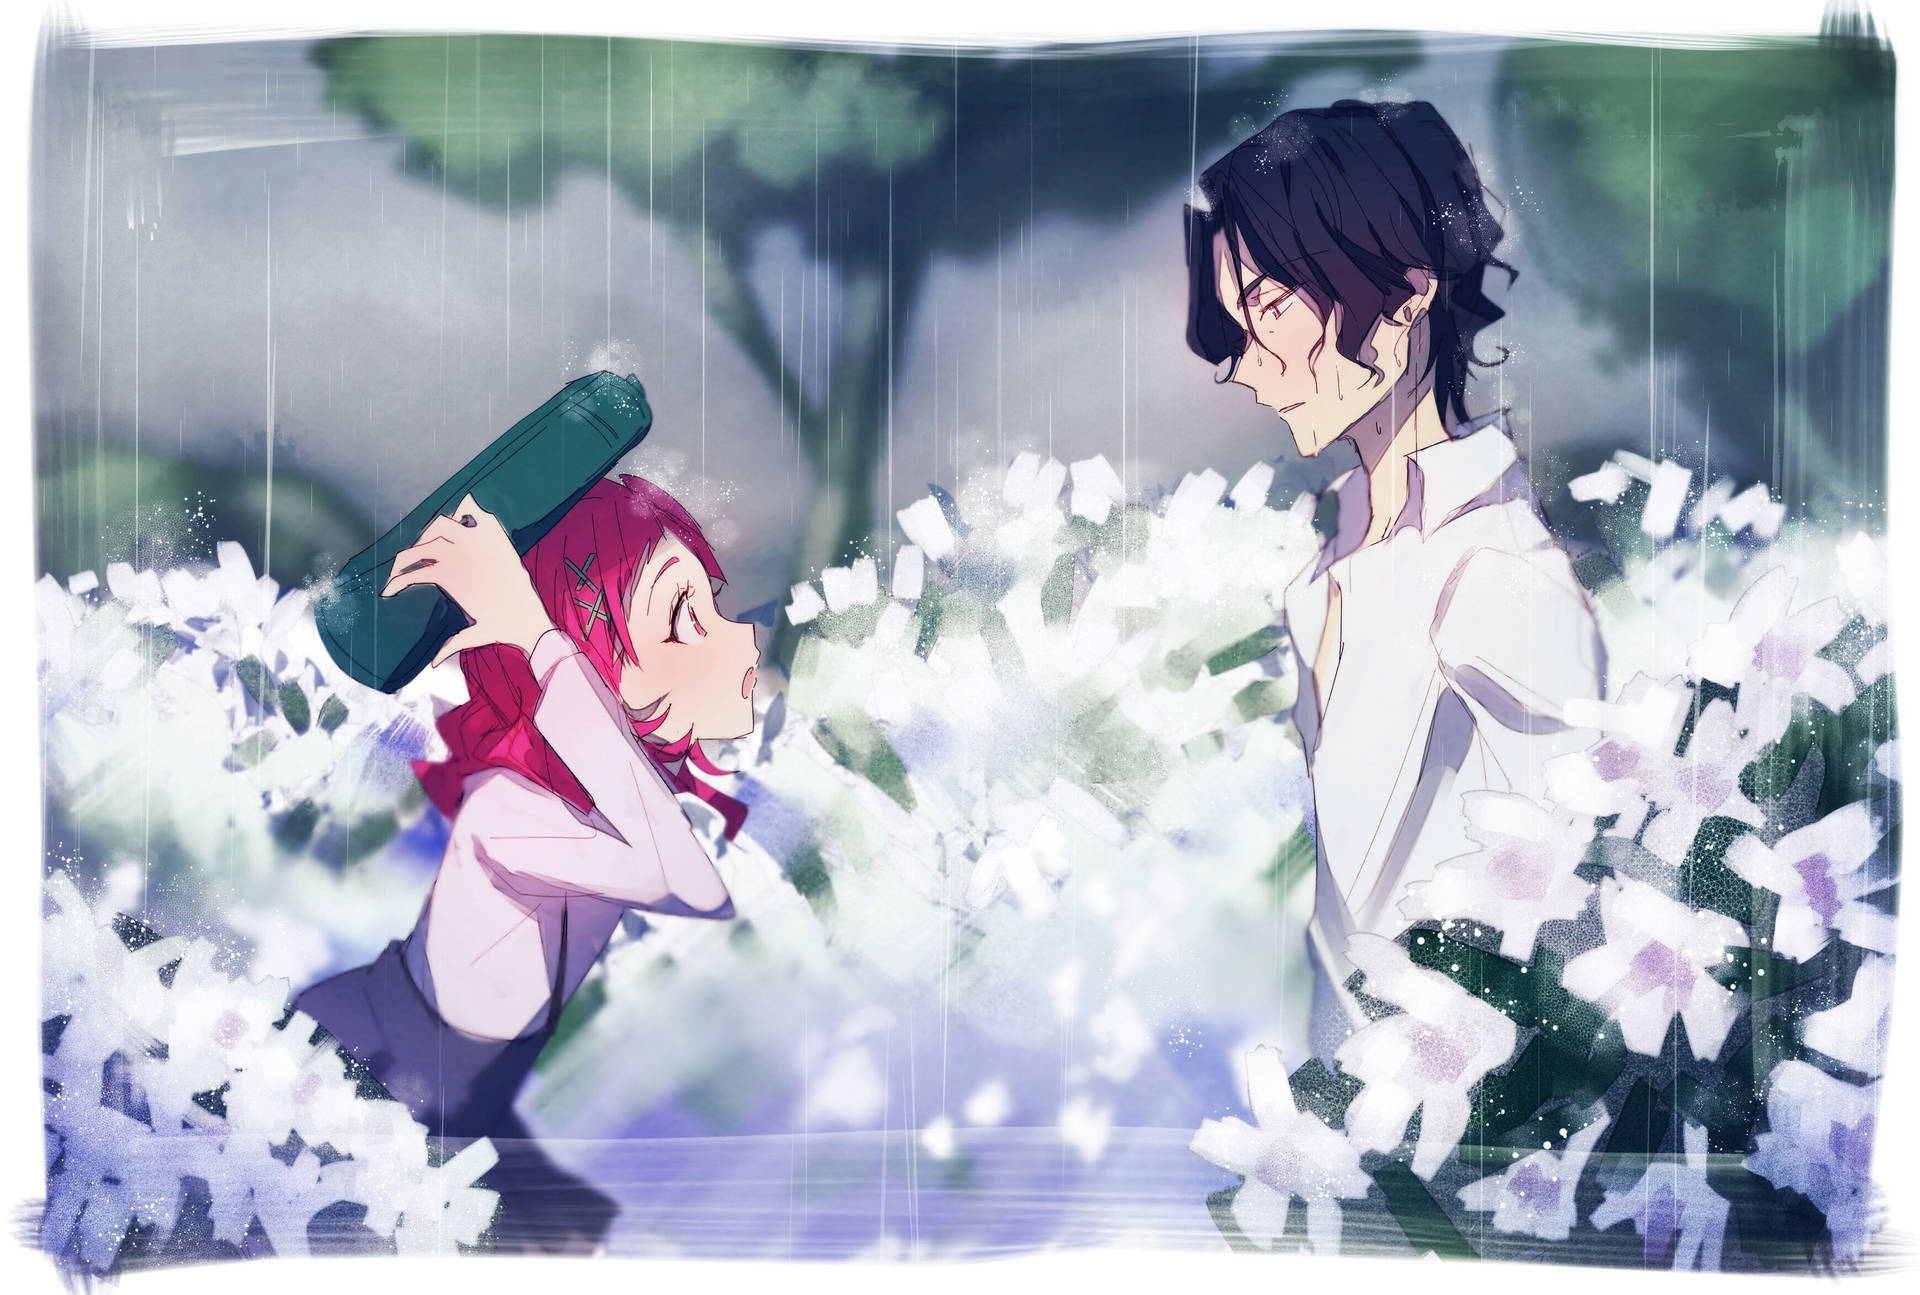 Cute Anime Couple In The Rain